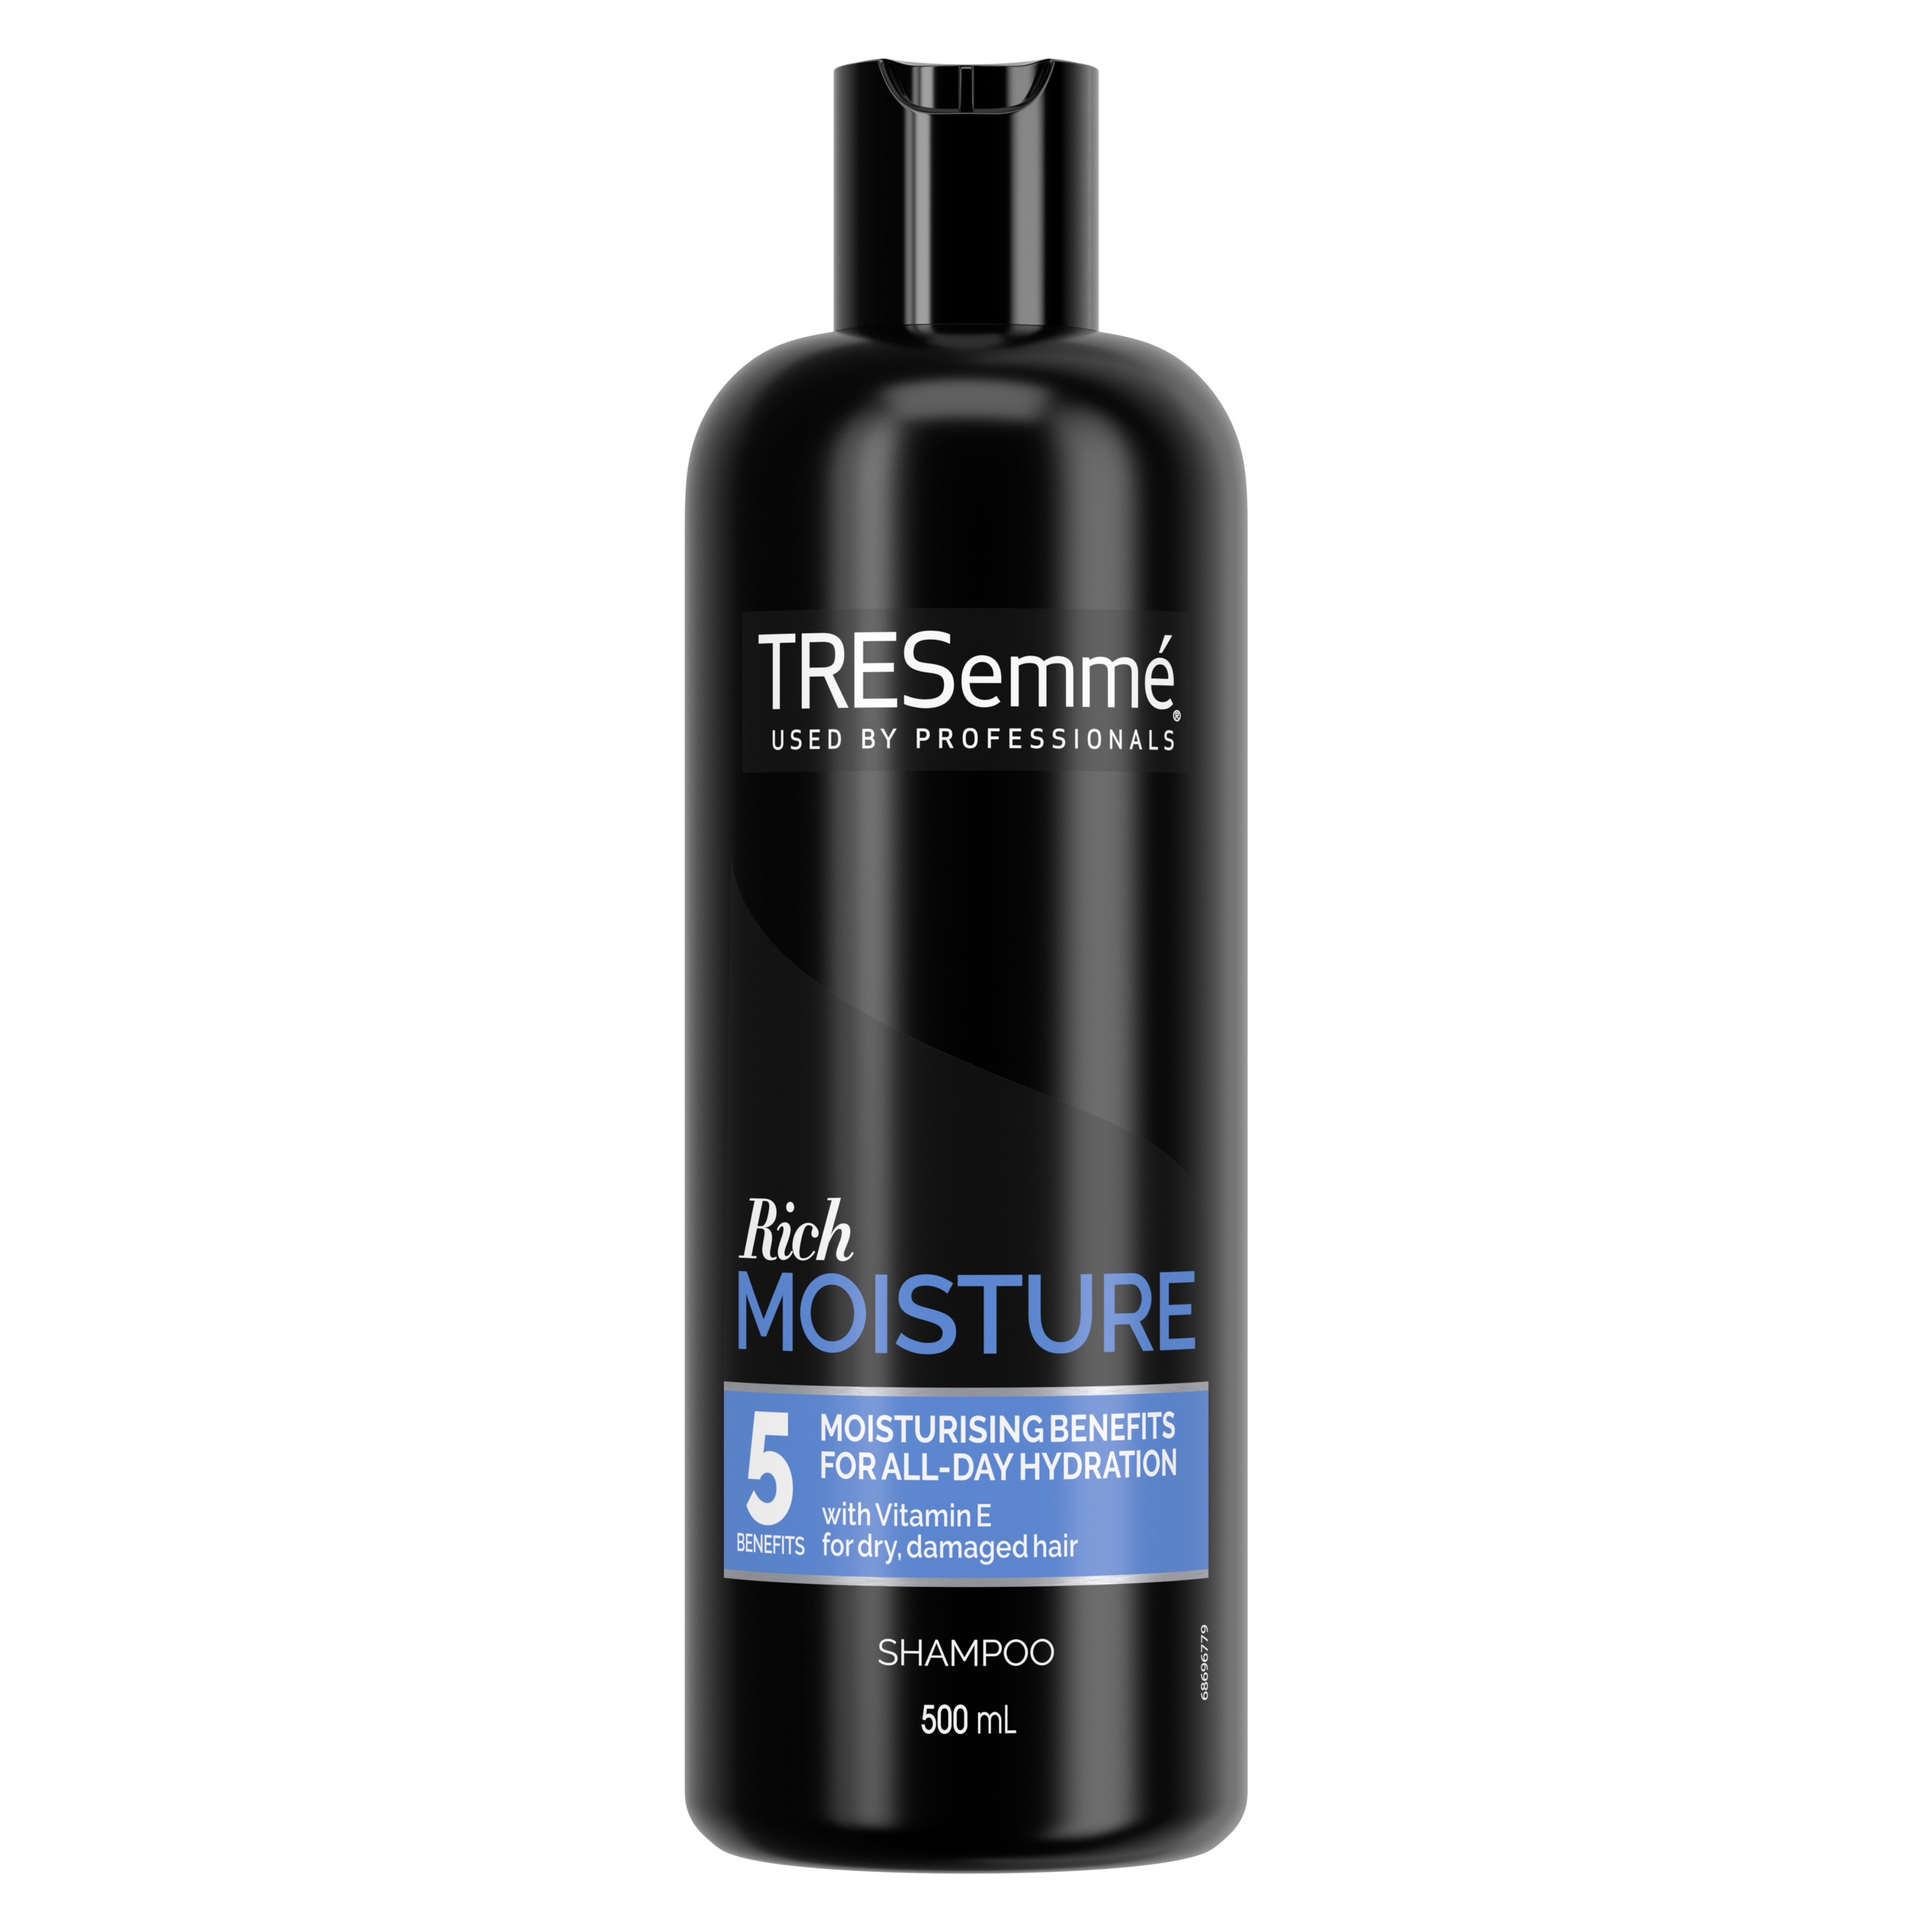 A 500ml bottle of TRESemmé Moisture Rich Shampoo front of pack image